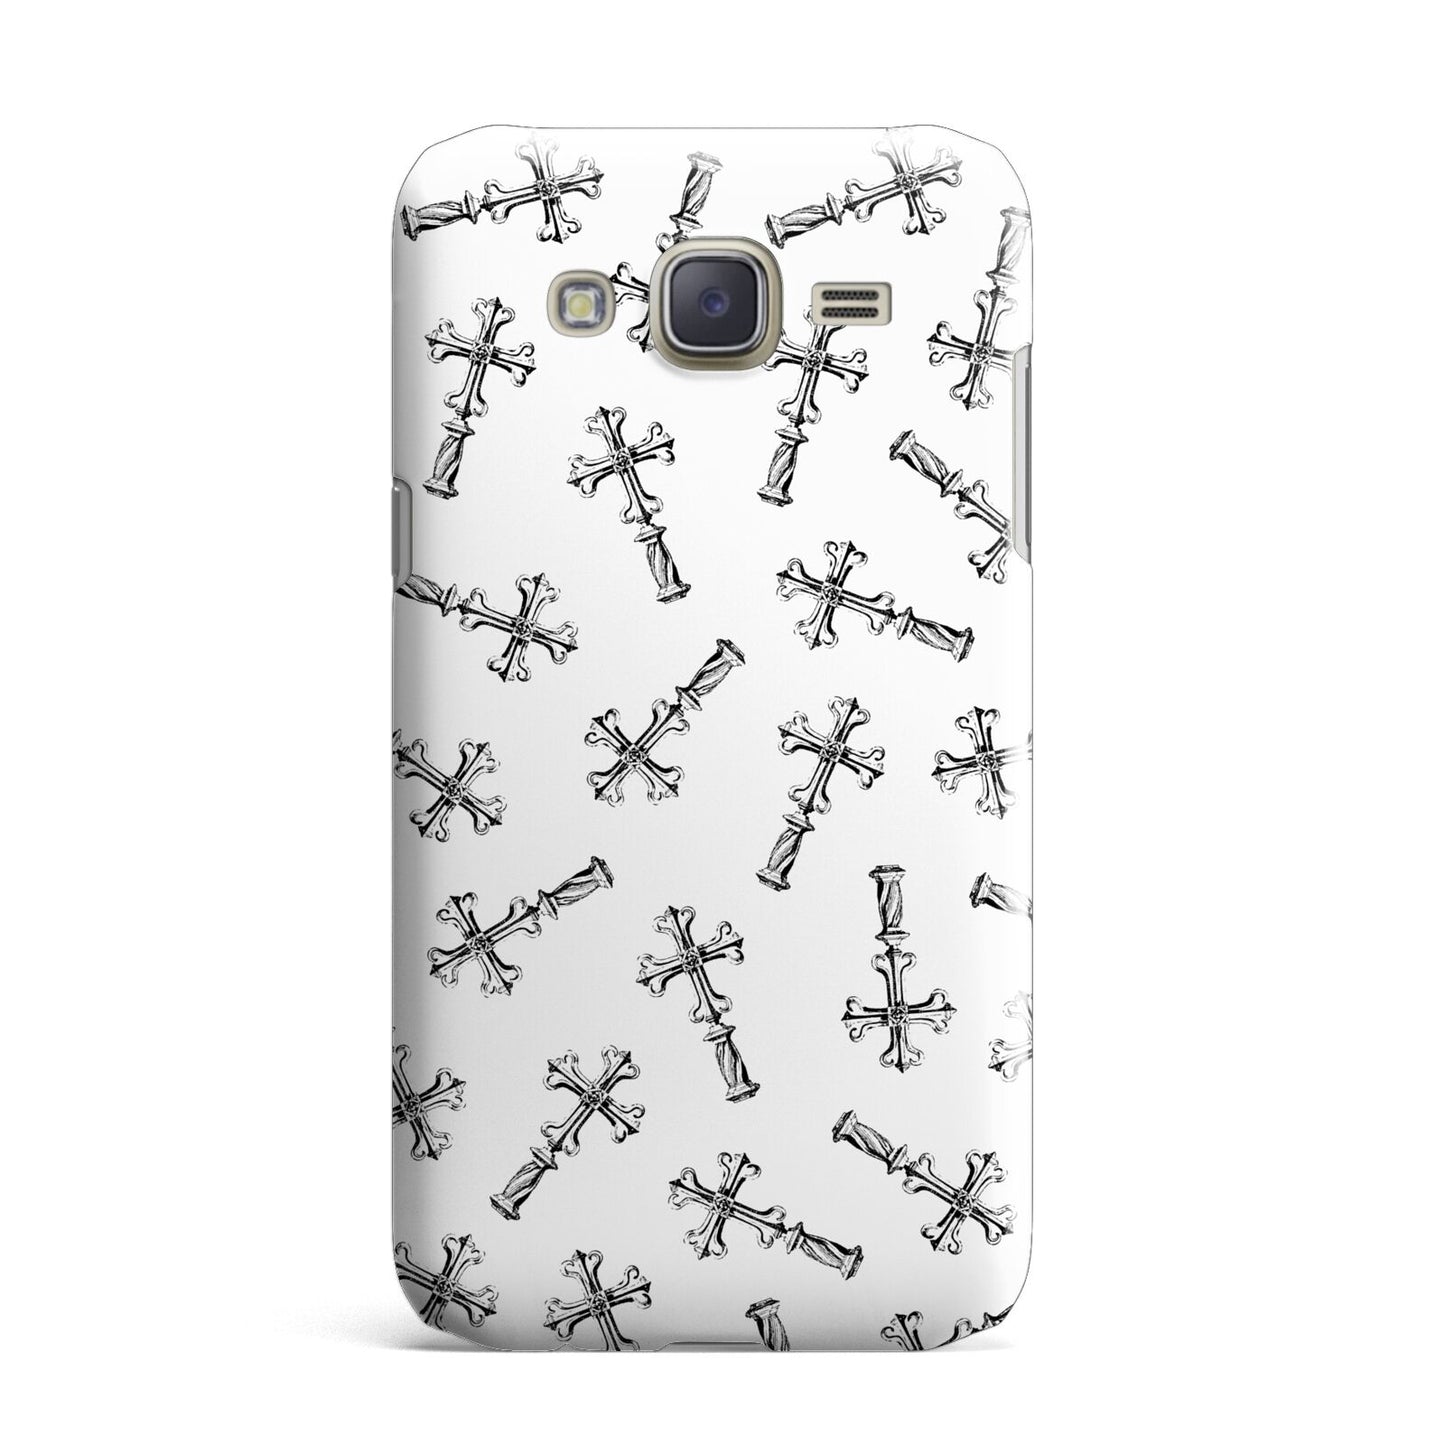 Monochrome Crosses Samsung Galaxy J7 Case